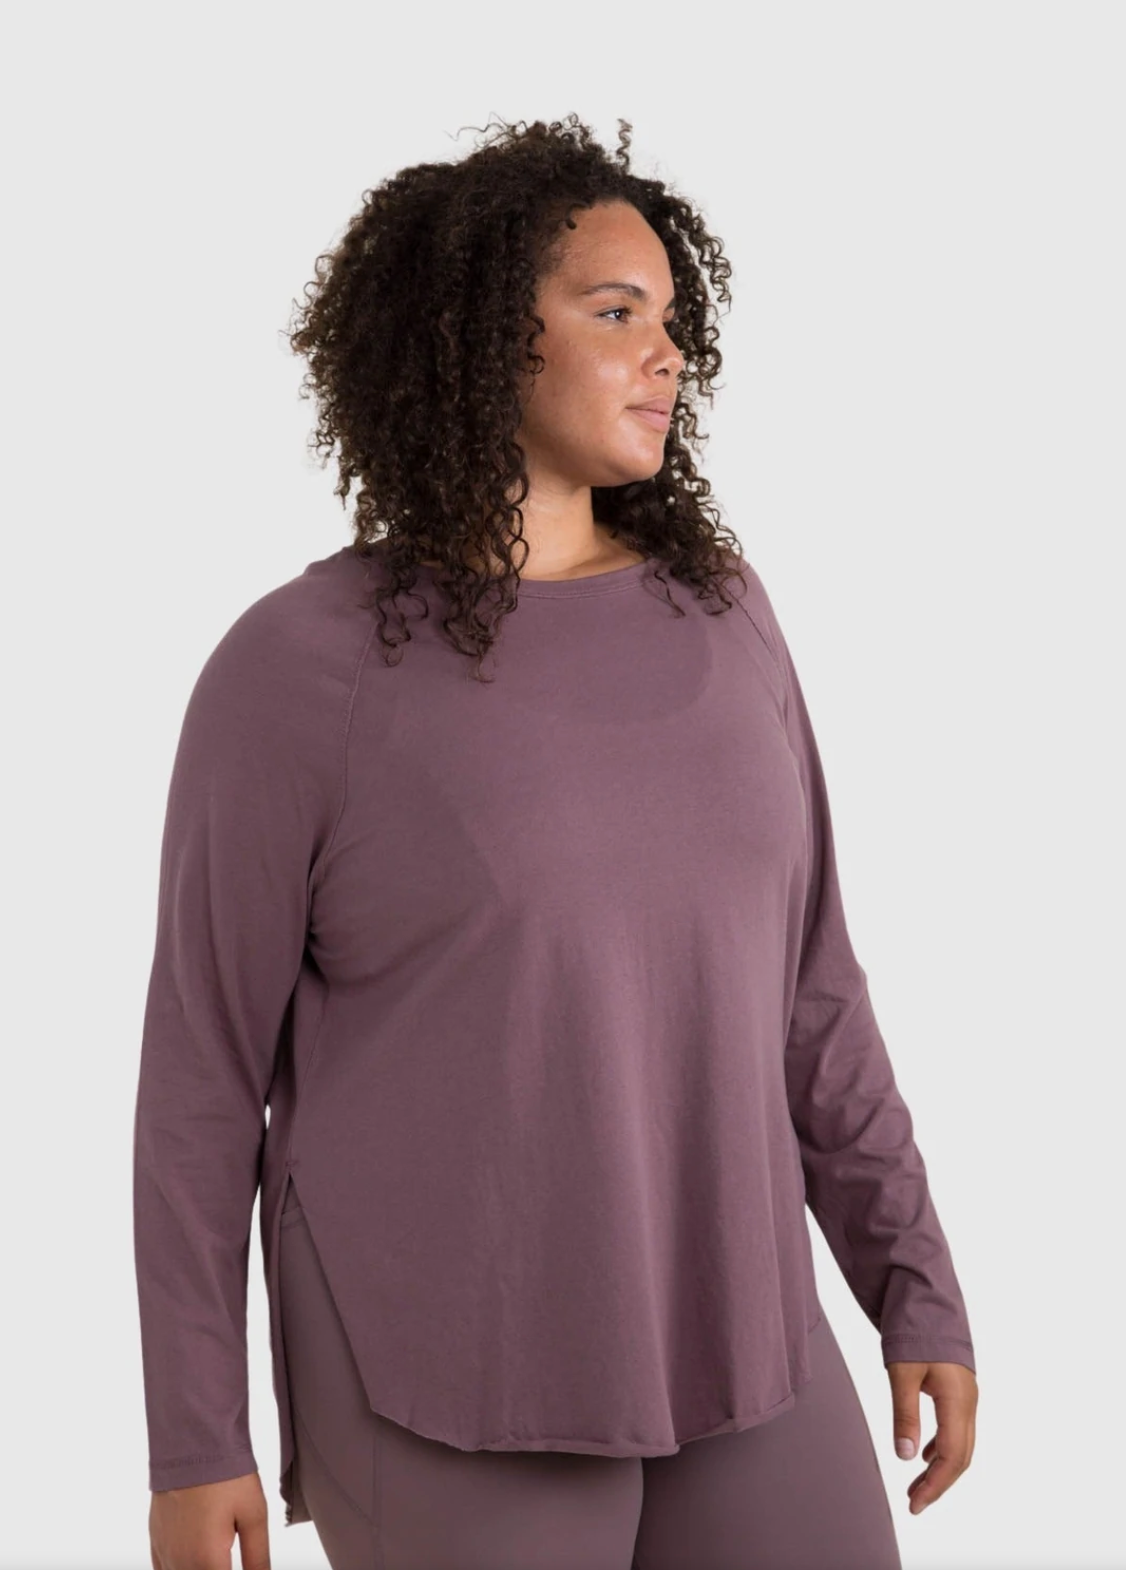 model wearing the long-sleeved shirt in purple